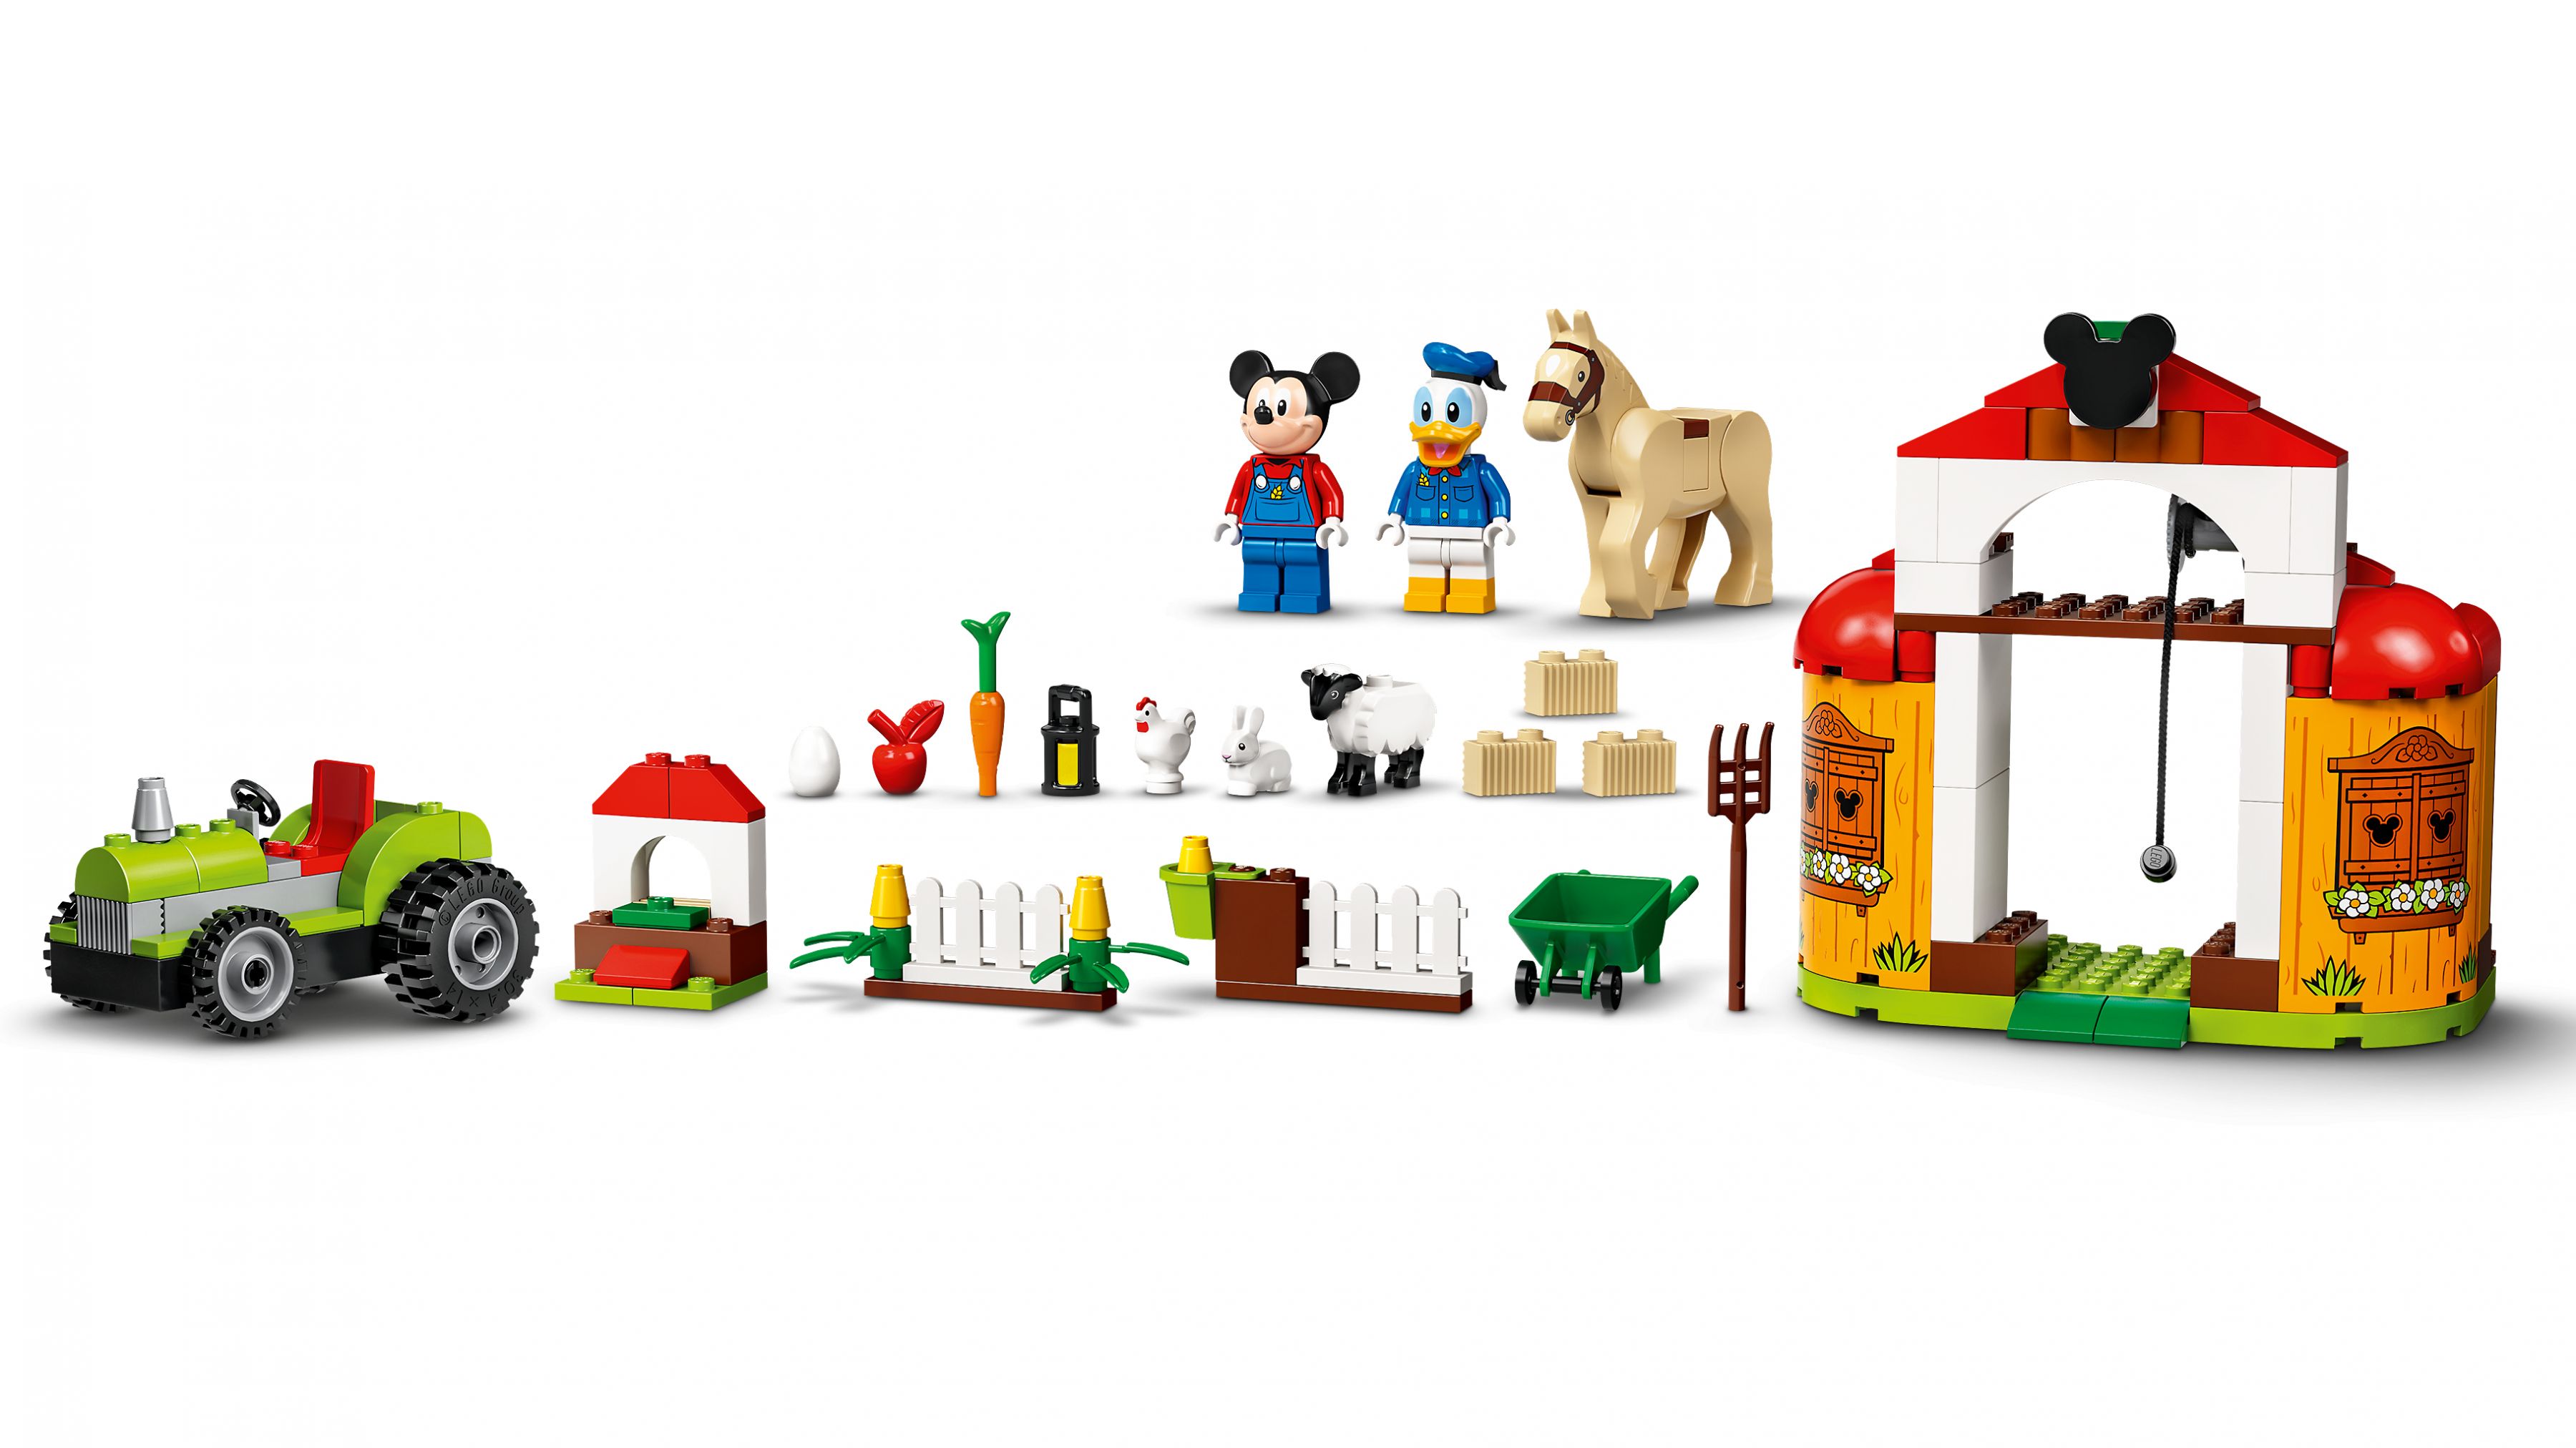 LEGO Disney 10775 Mickys und Donald Duck's Farm LEGO_10775_web_sec01_nobg.jpg